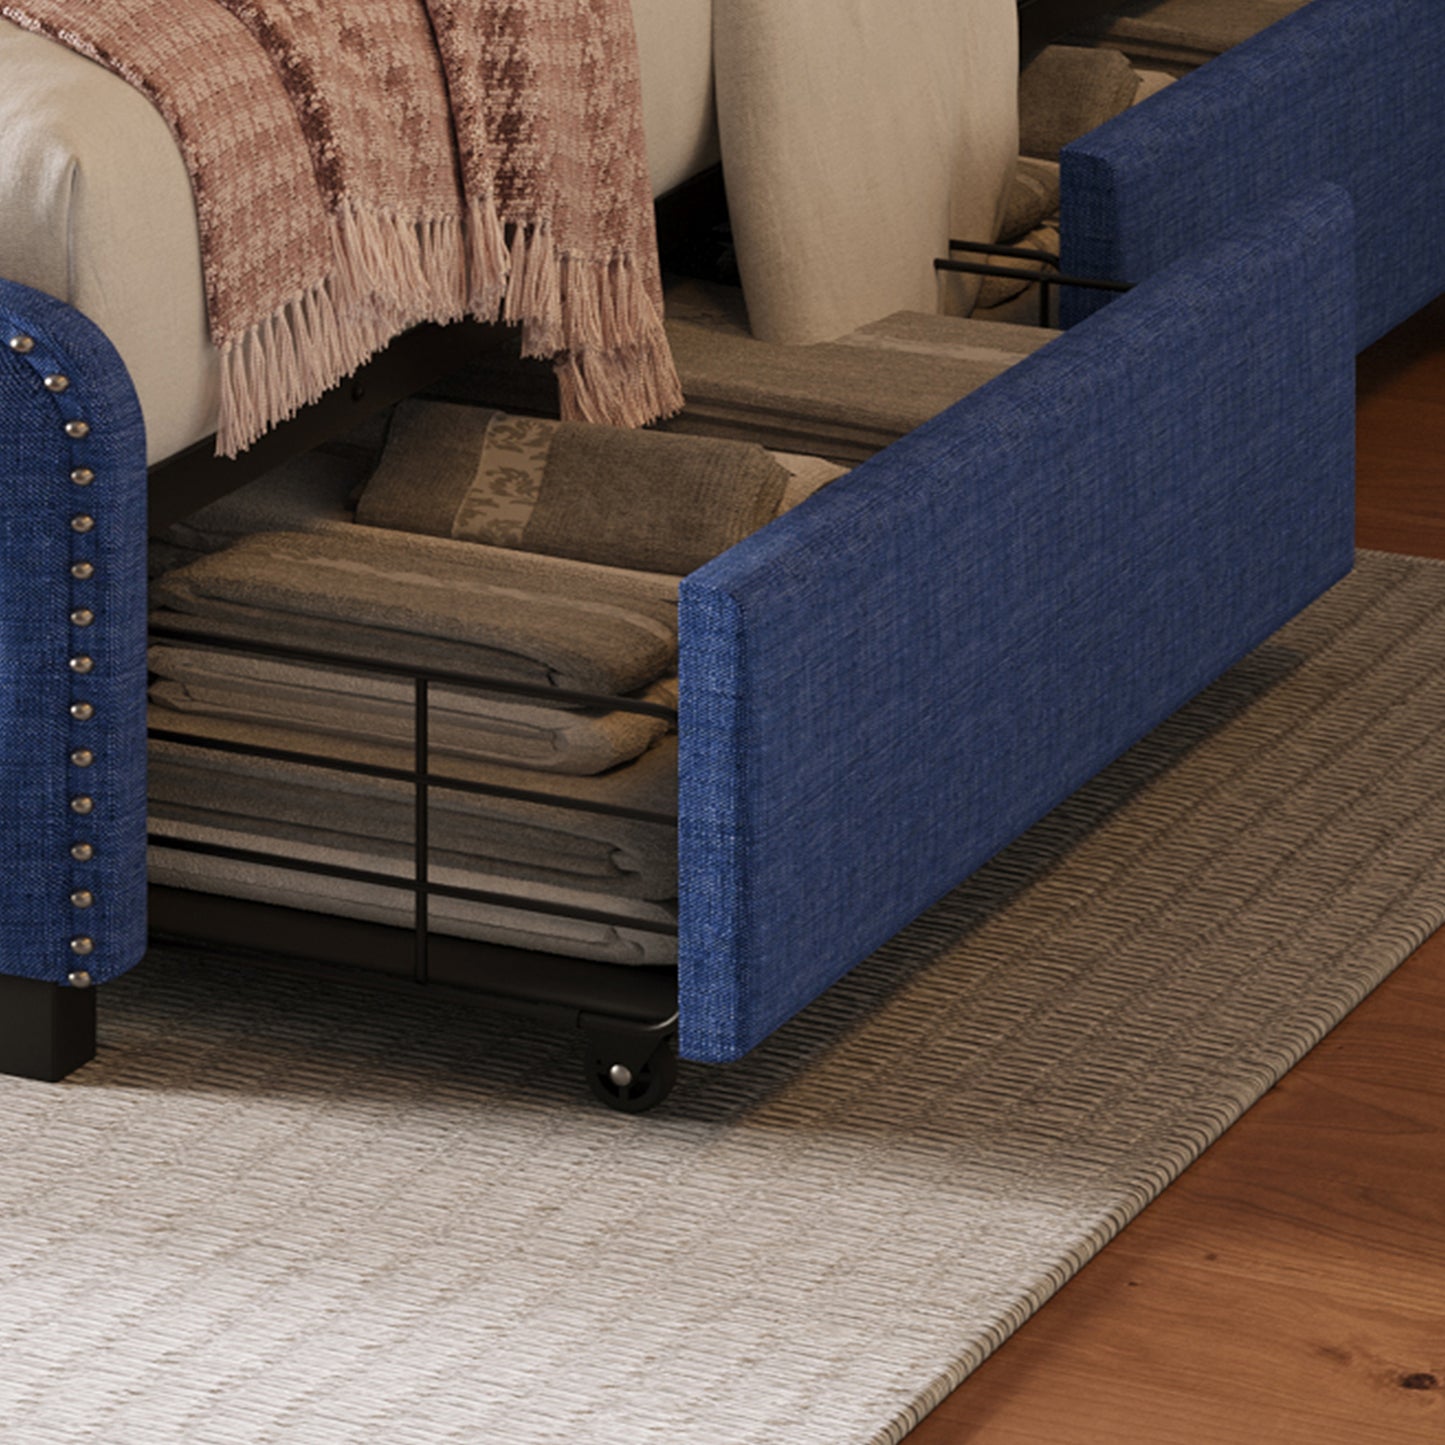 upholstered platform bed frame with four drawers, blue